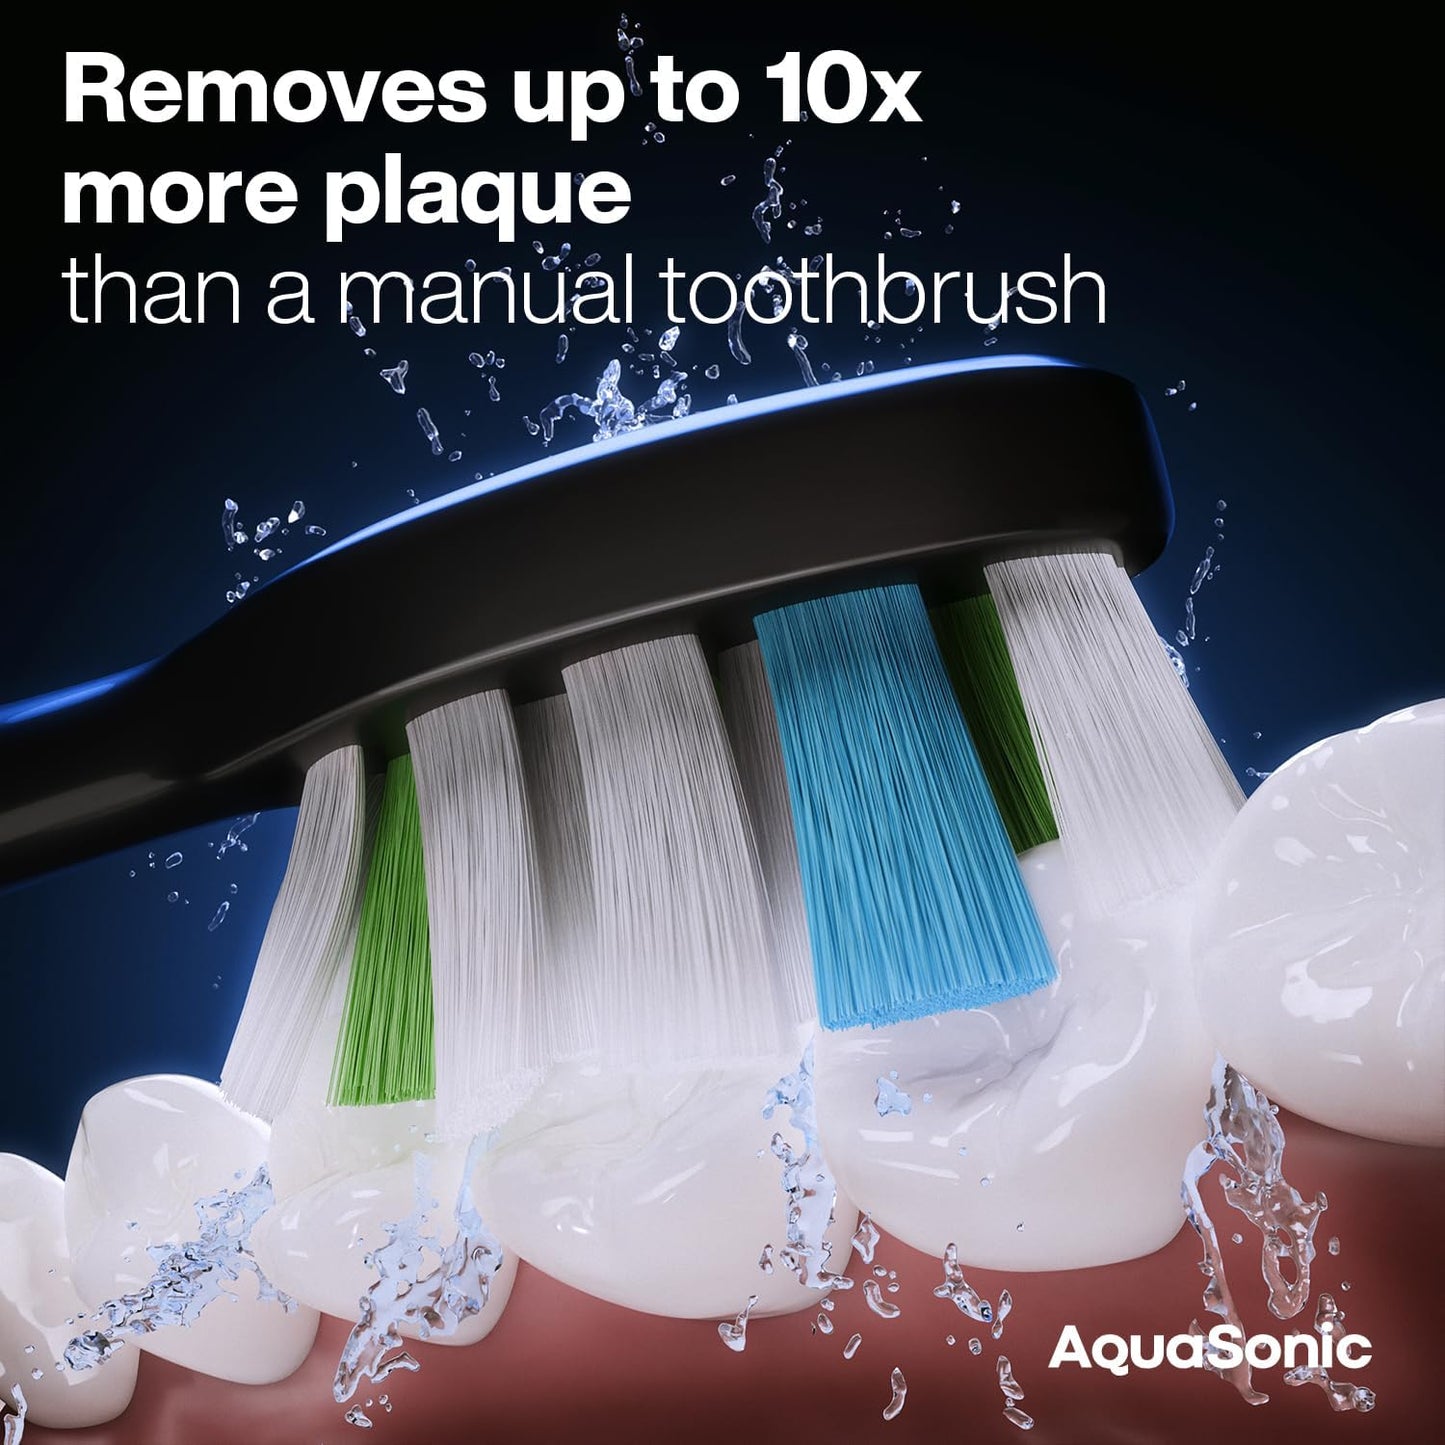 Aquasonic Clinical AQ Ultra-Whitening Smart Toothbrush with Touchscreen, Bluetooth & Brushing Coach - 2 Brush Heads & UV Sanitizing Charging Case